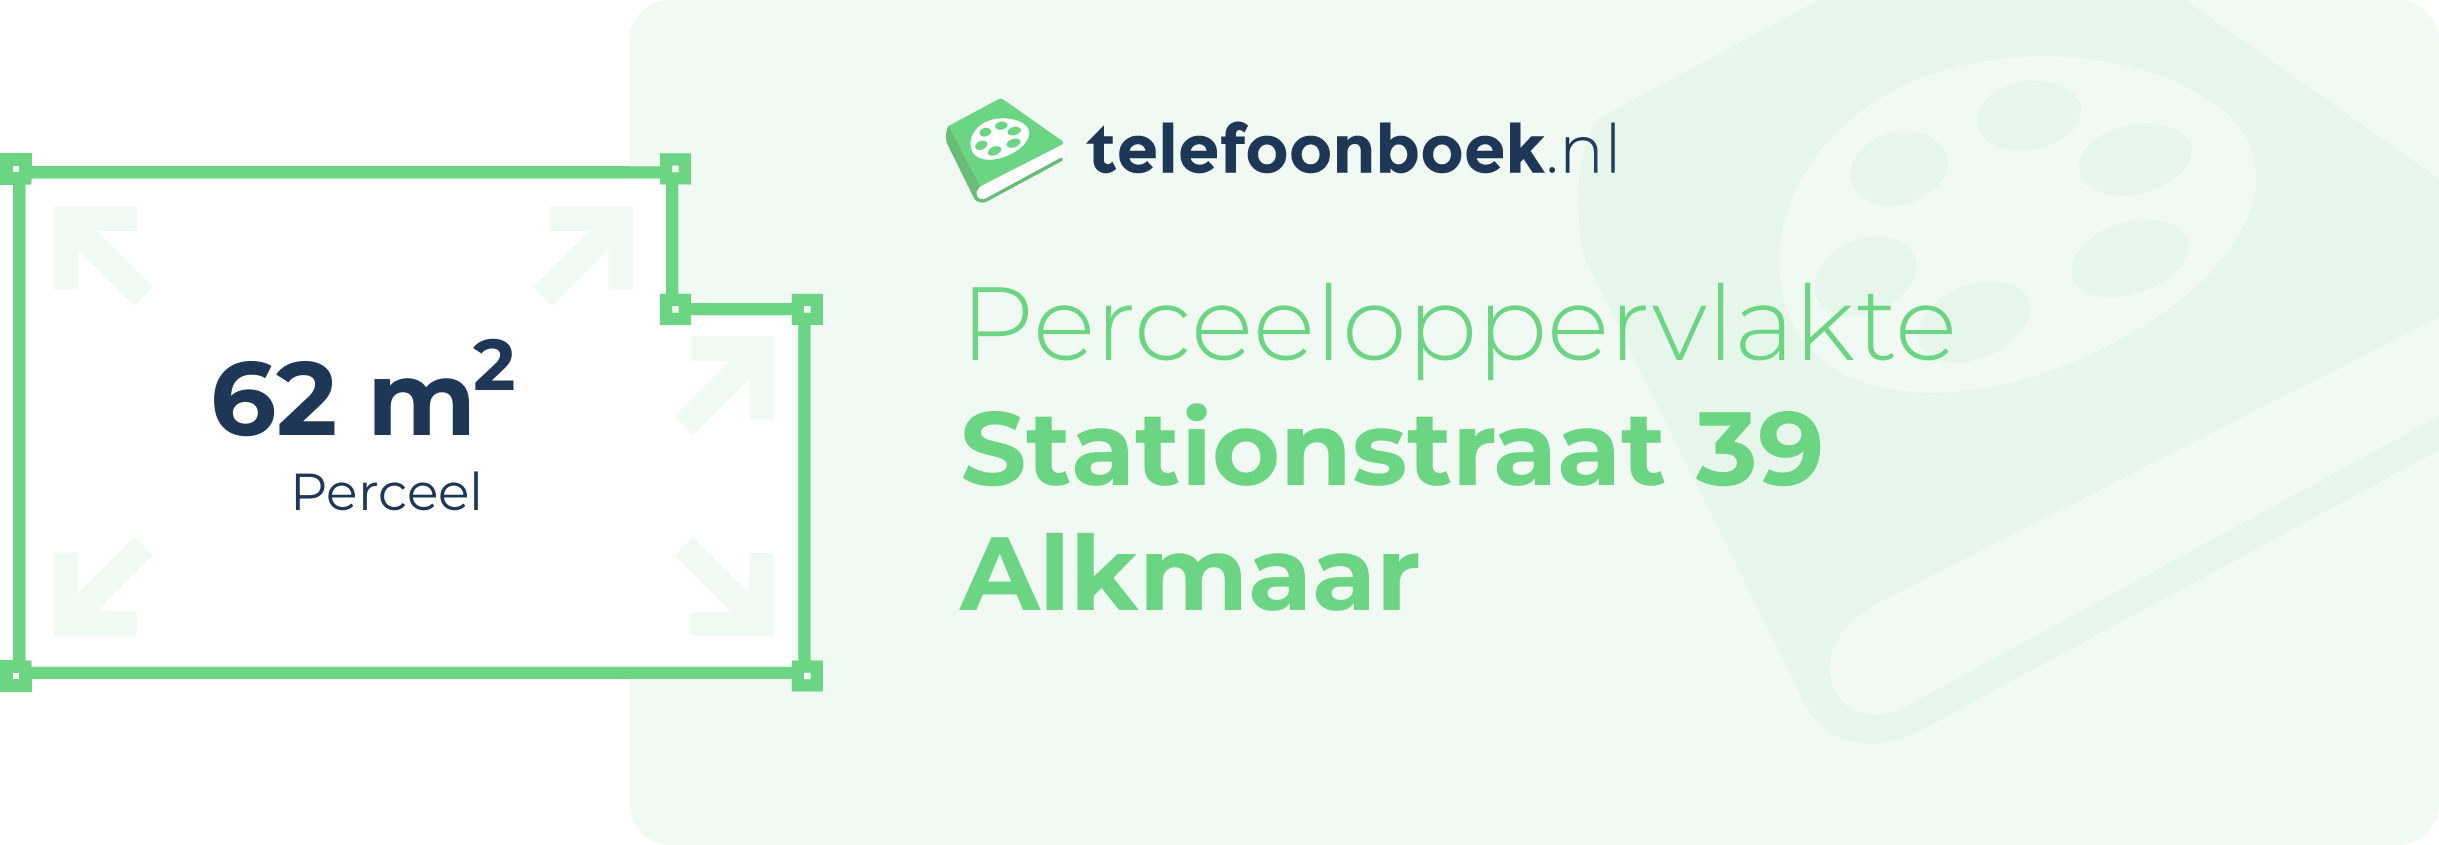 Perceeloppervlakte Stationstraat 39 Alkmaar